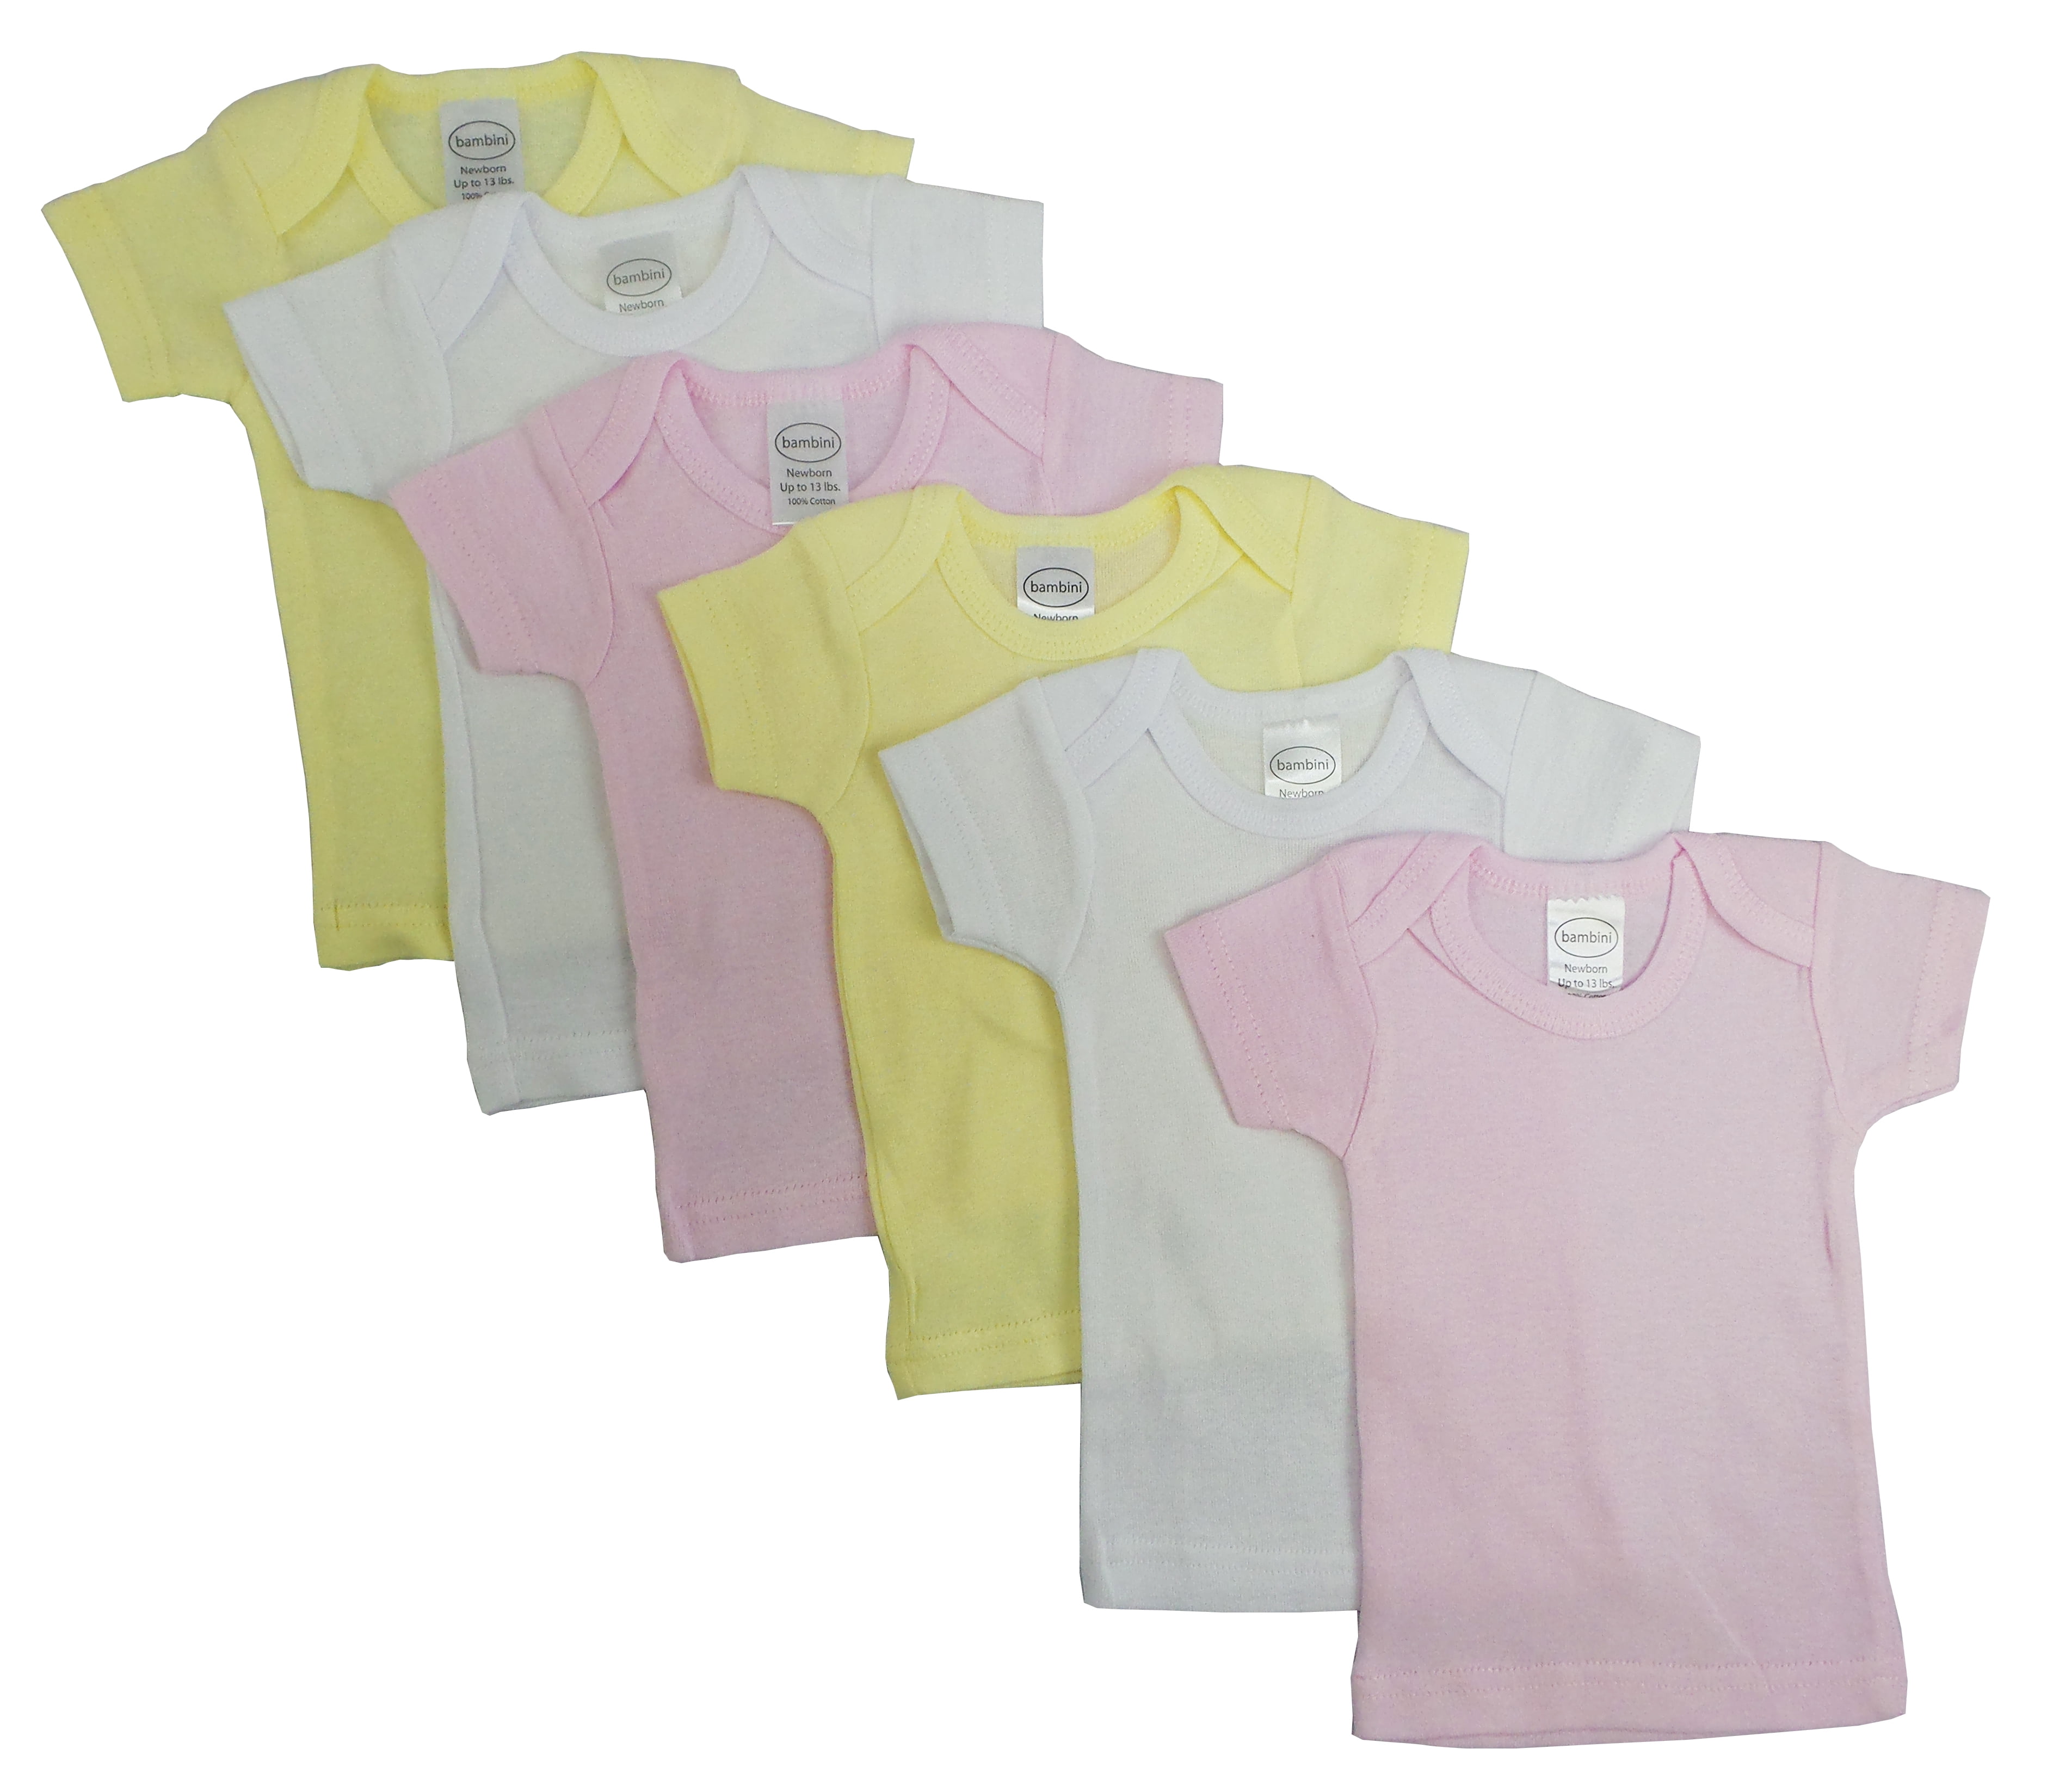 Cs-057nb-057nb Girls Pastel Variety Short Sleeve Lap T-shirts, Assorted - Newborn